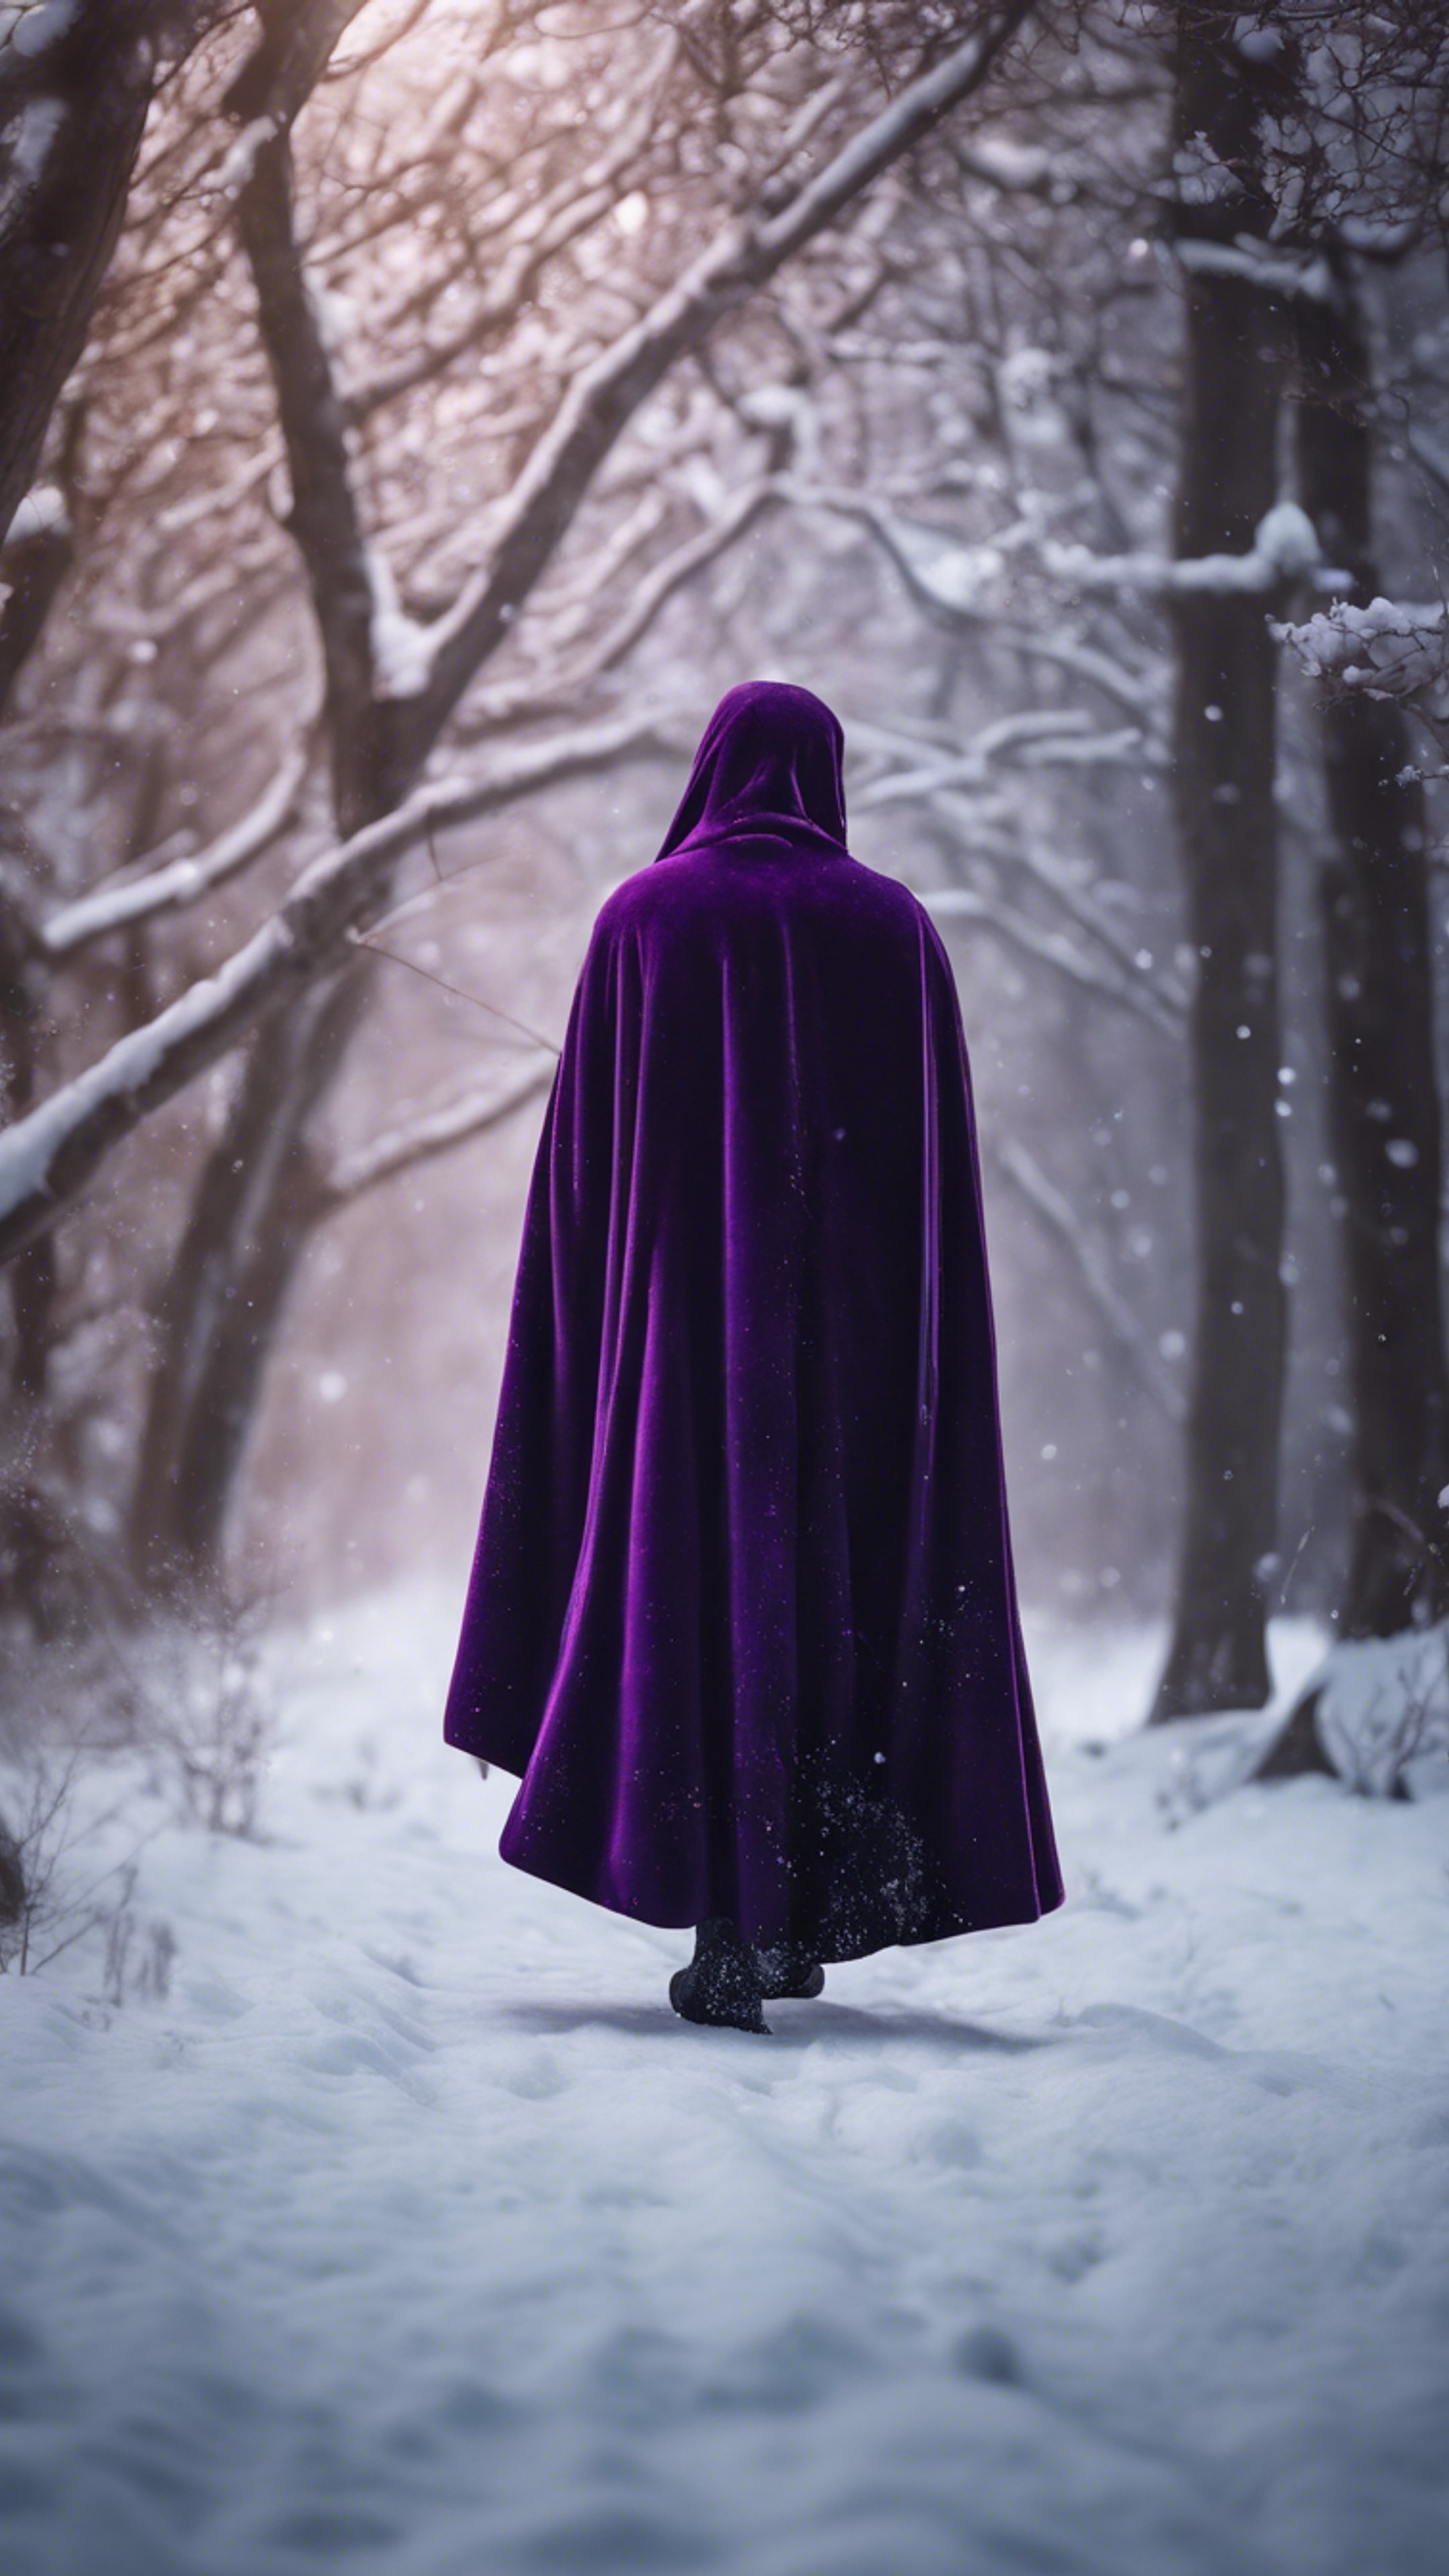 A luxurious dark purple velvet cloaked figure walking in a snow-capped landscape. Wallpaper[f8322135218c476aba30]